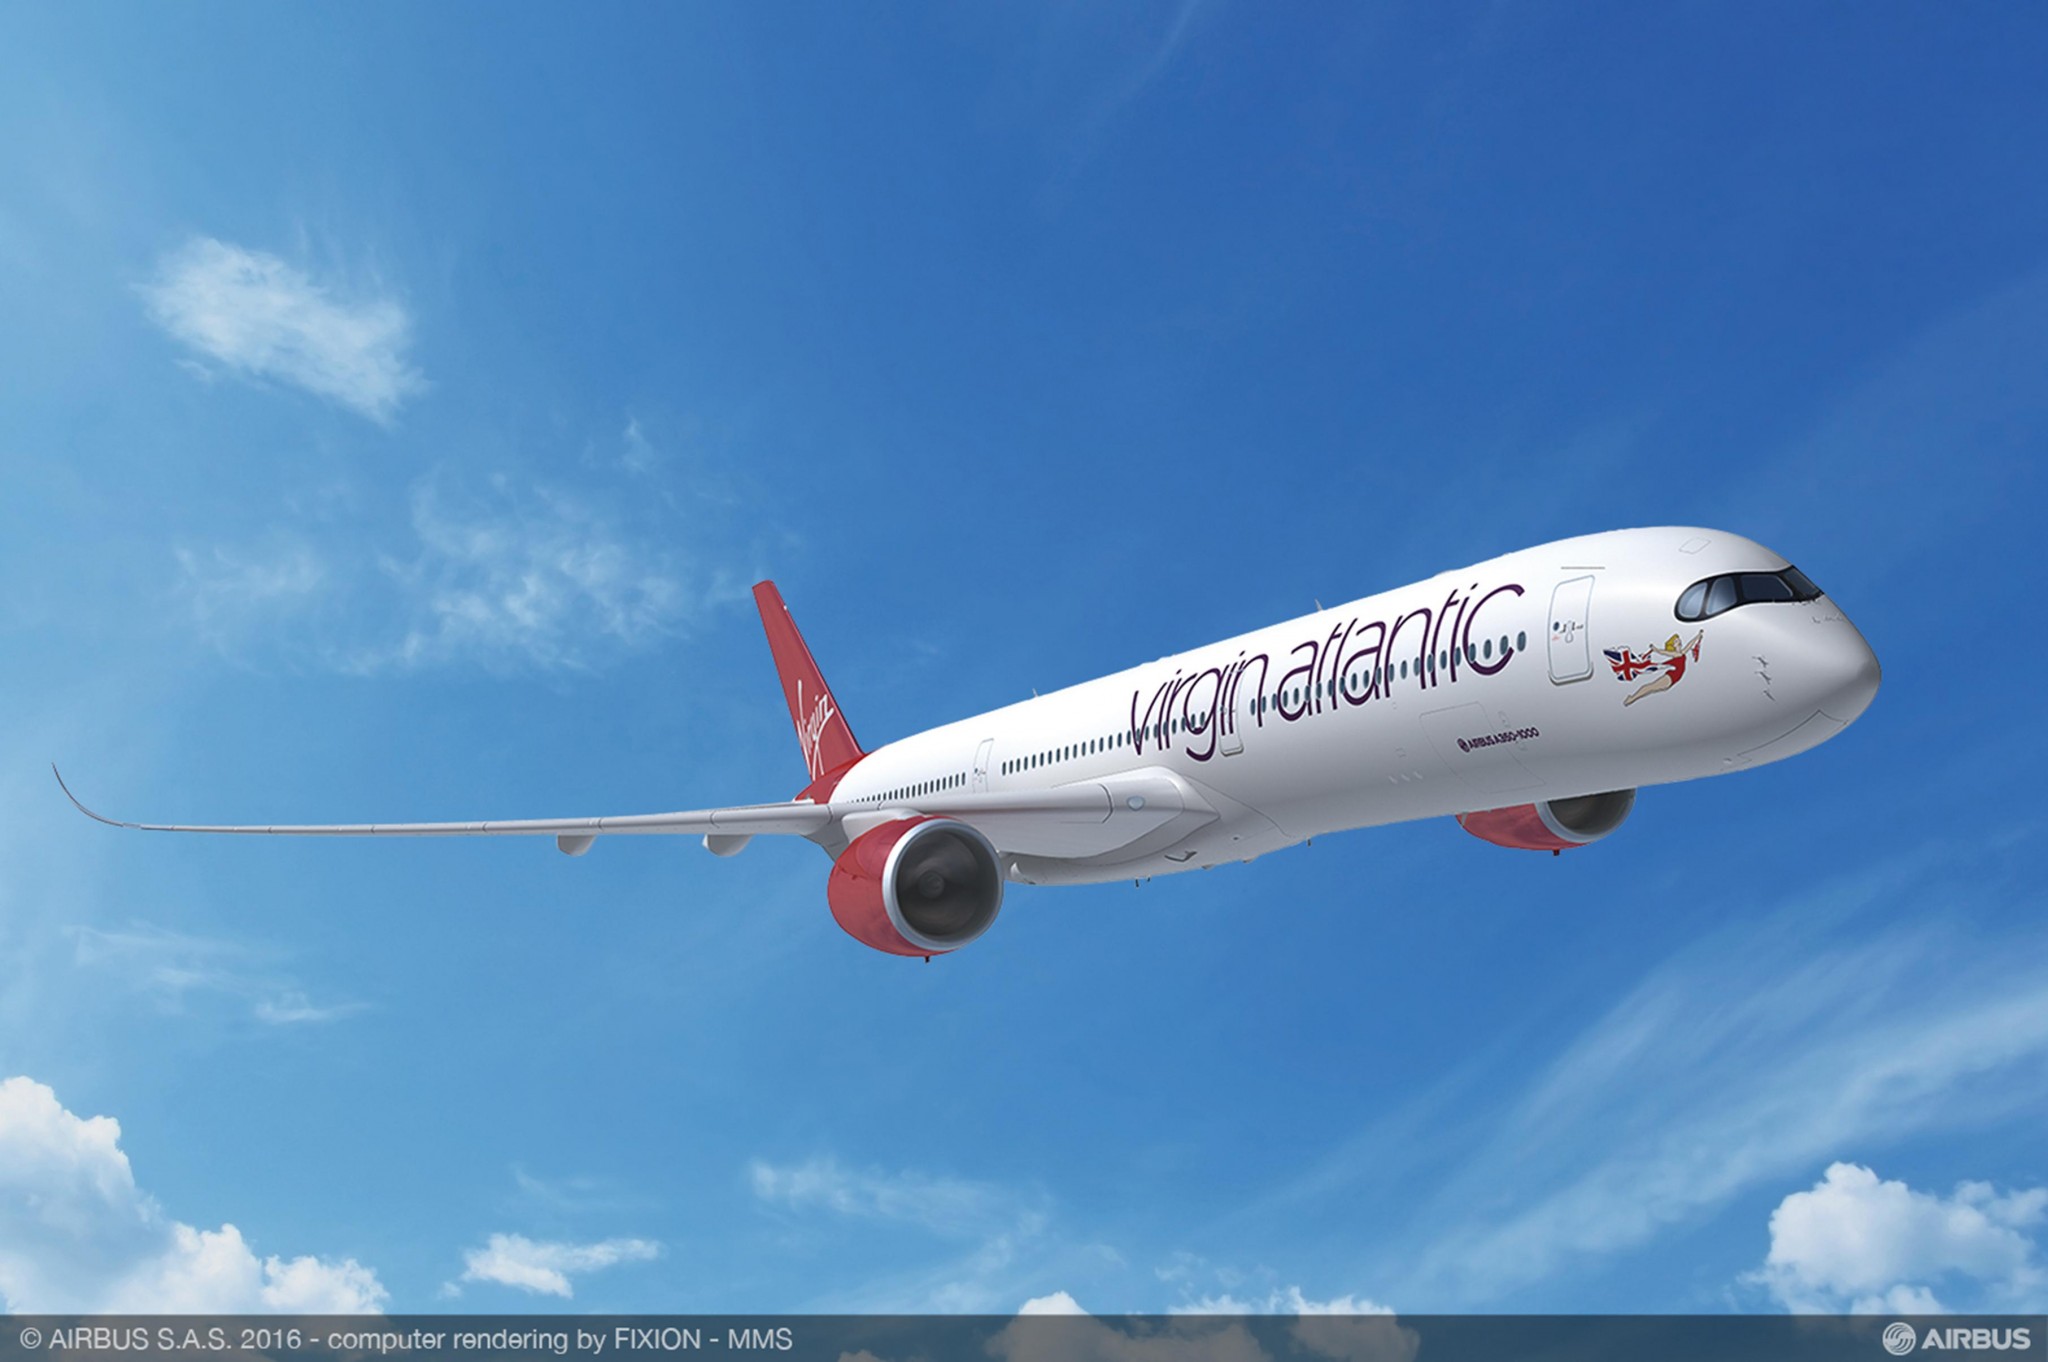 Virgin Atlantic debuts 787 on London Heathrow to Seattle route